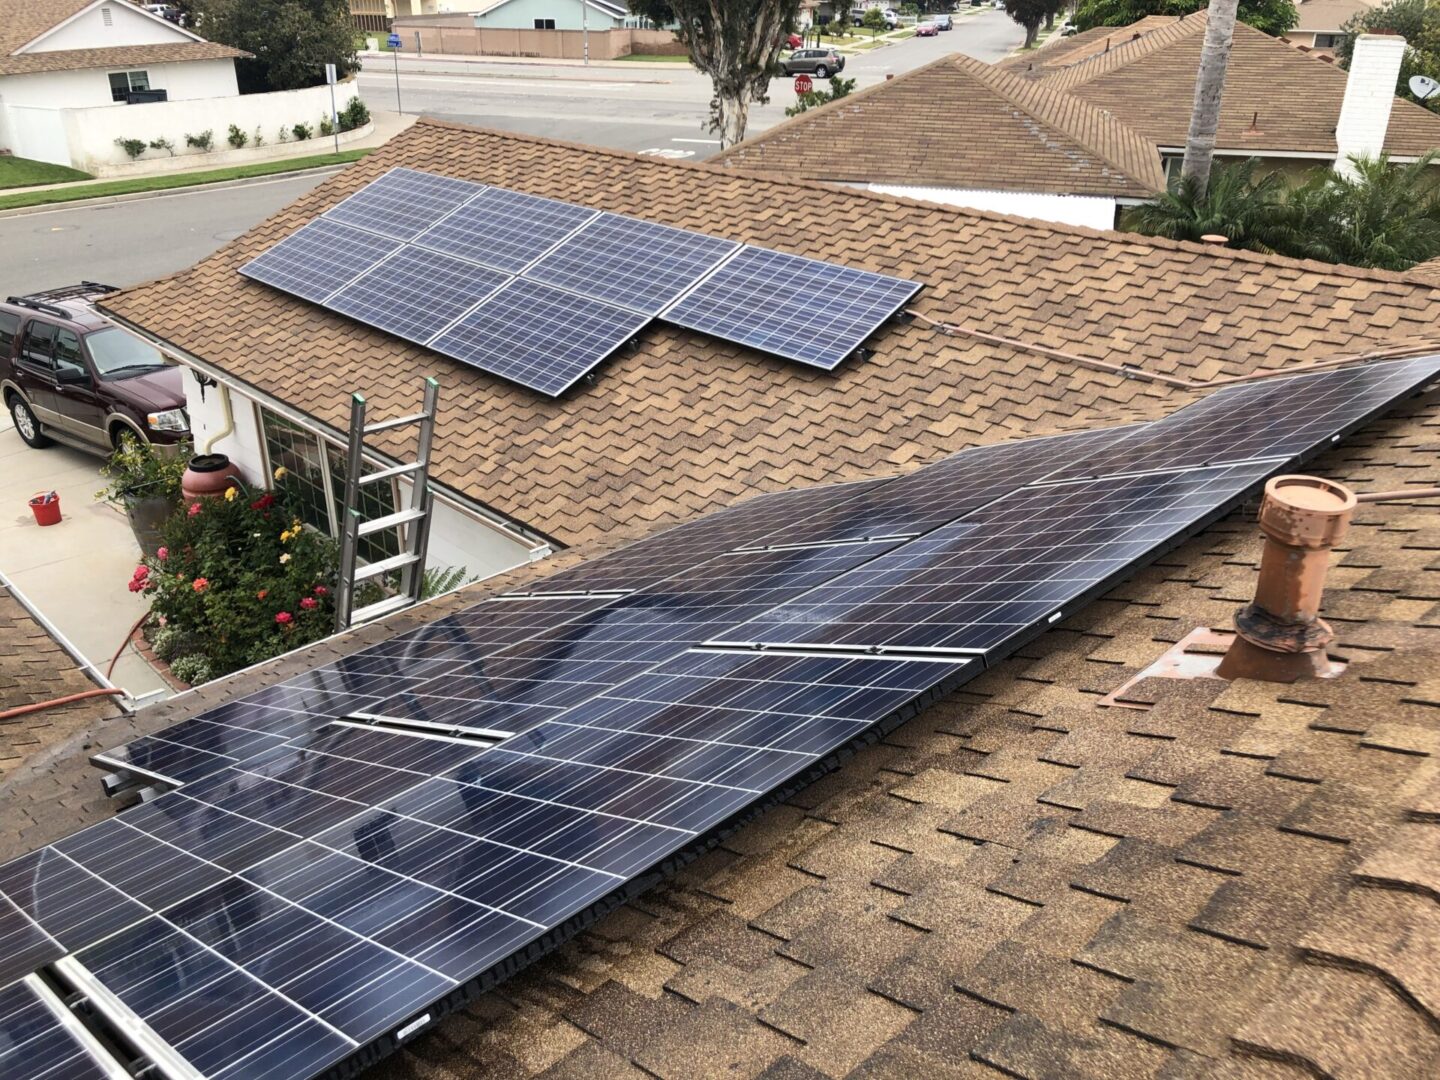 Multiple solar panels